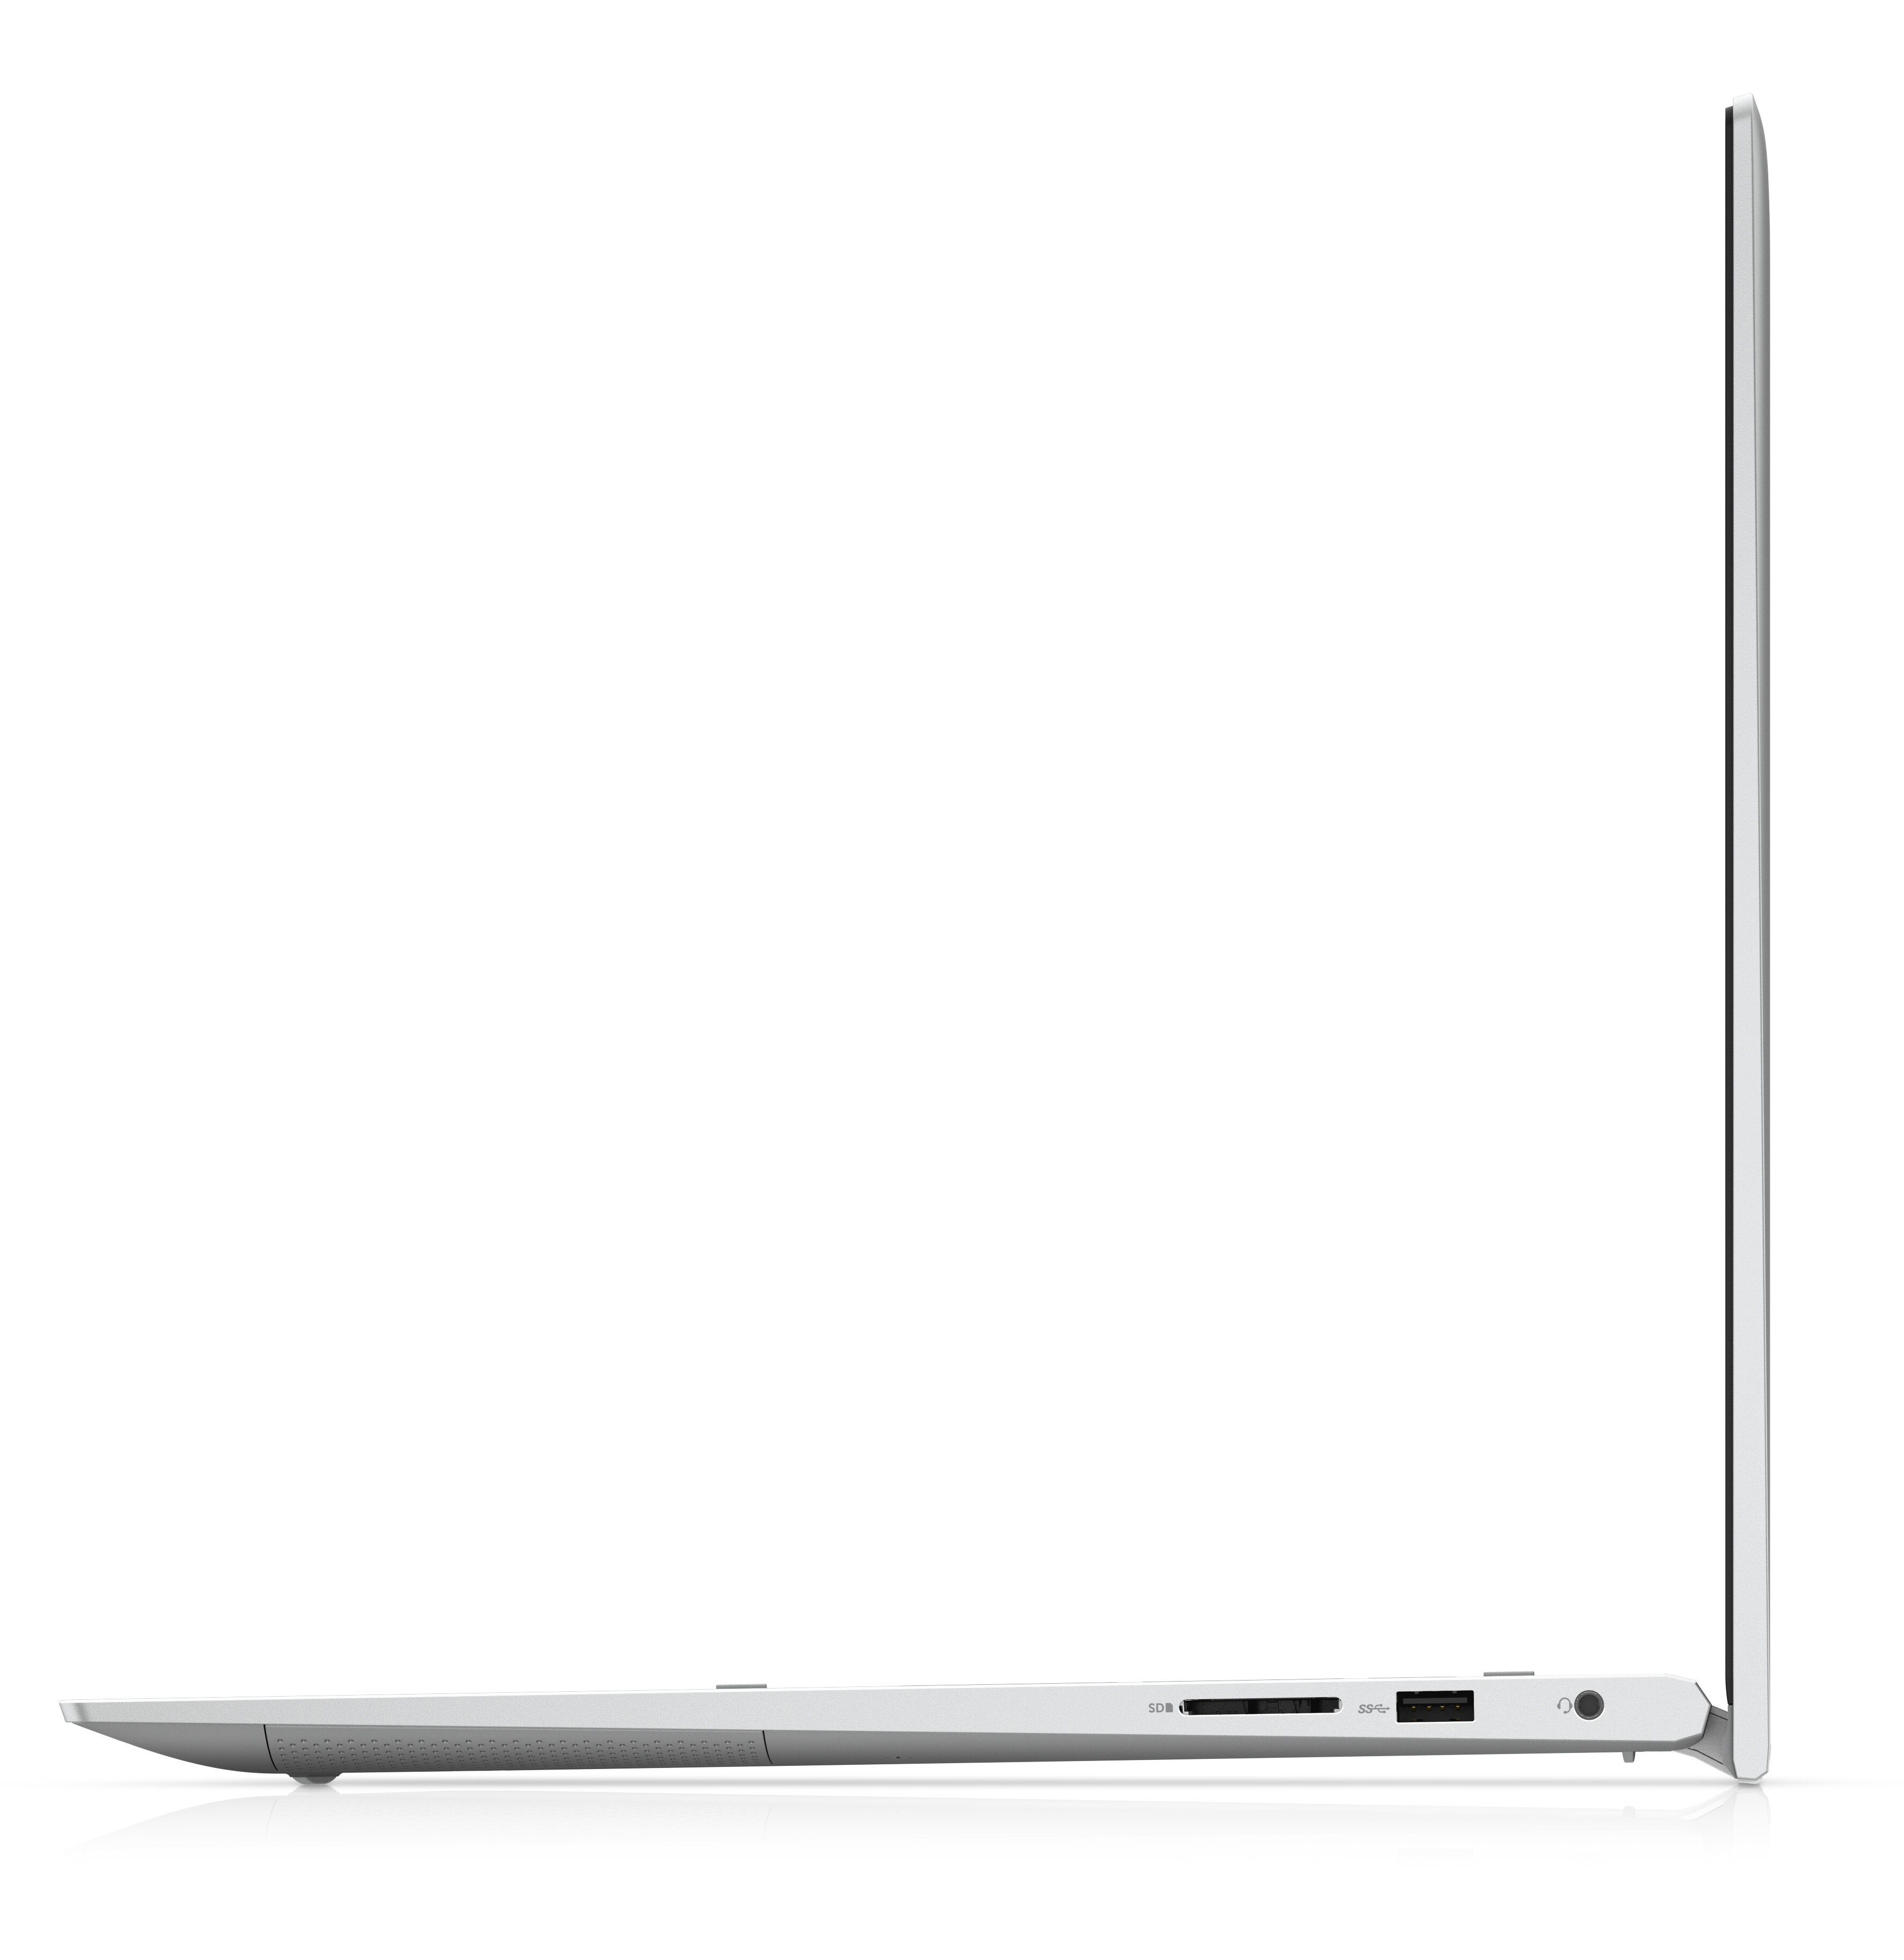 Dell Inspiron 17 7791, PC portable 17″ tactile > Tablette polyvalent rapide  TB3 – LaptopSpirit